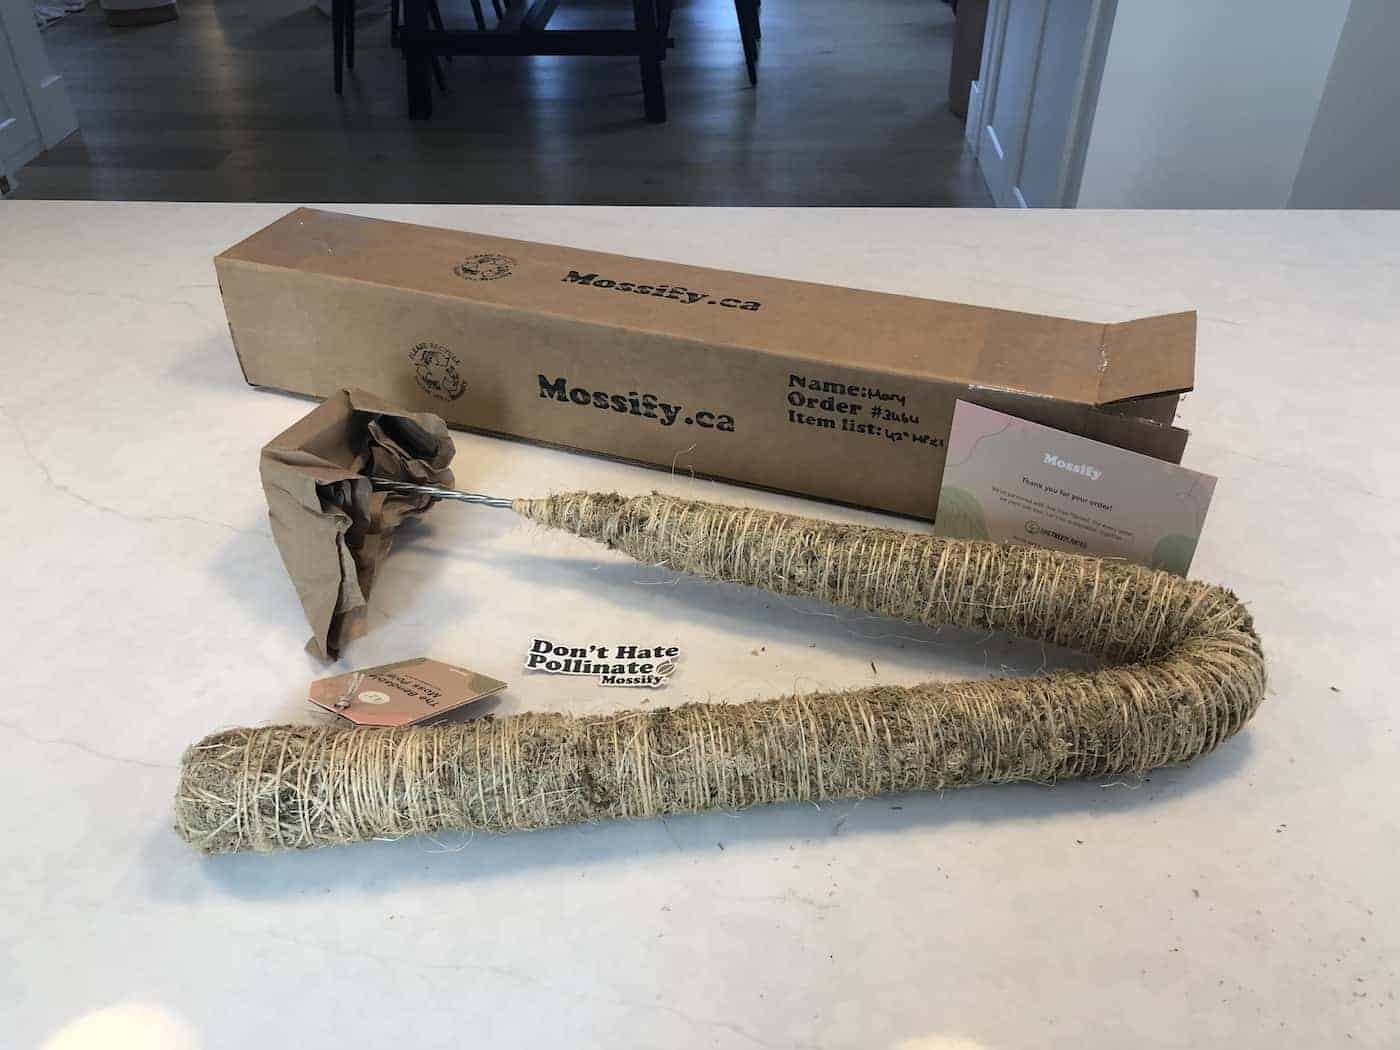 Moss pole bent in half inside shipping box - flexible moss pole